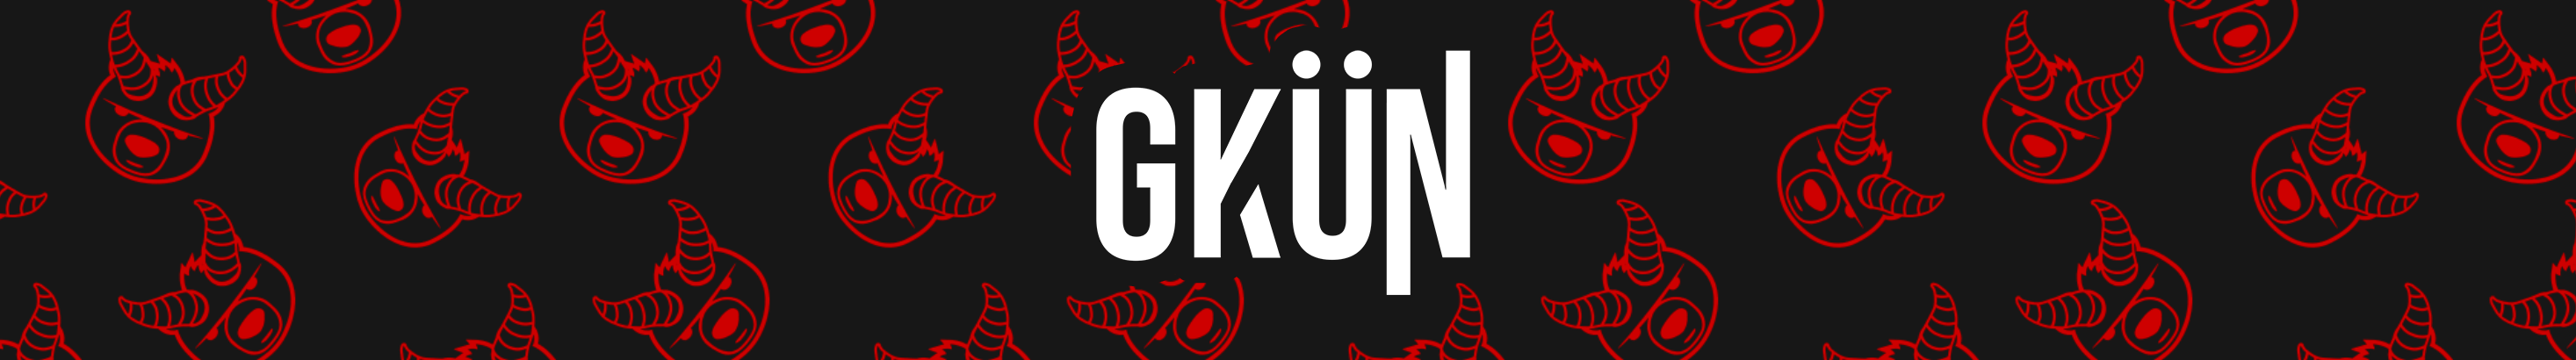 Gkun .'s profile banner